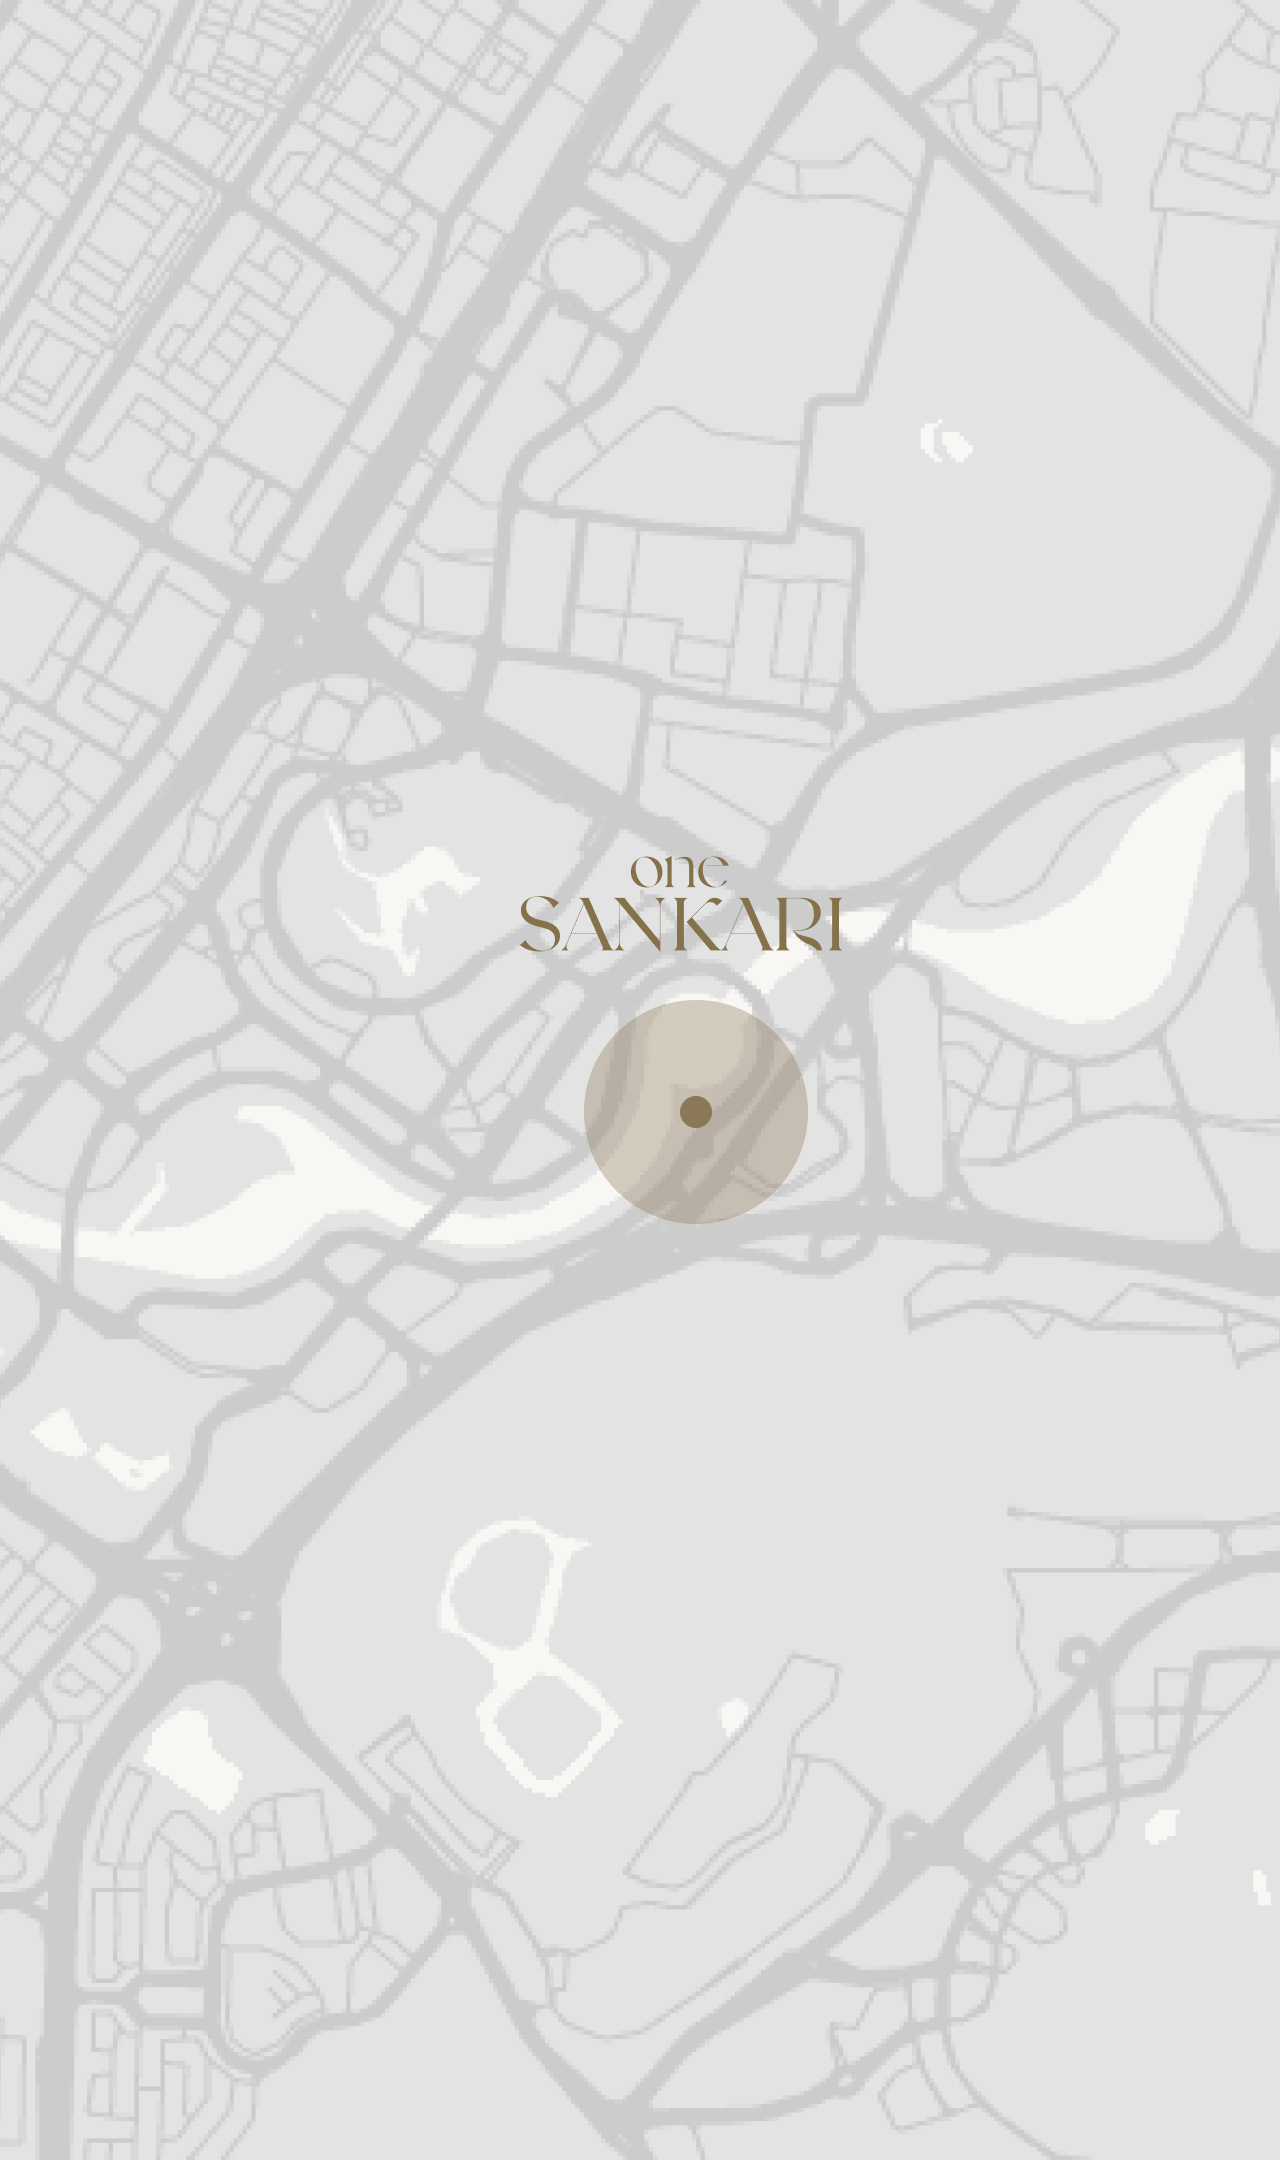 One Sankari: Address of real estate project by Sankari Properties